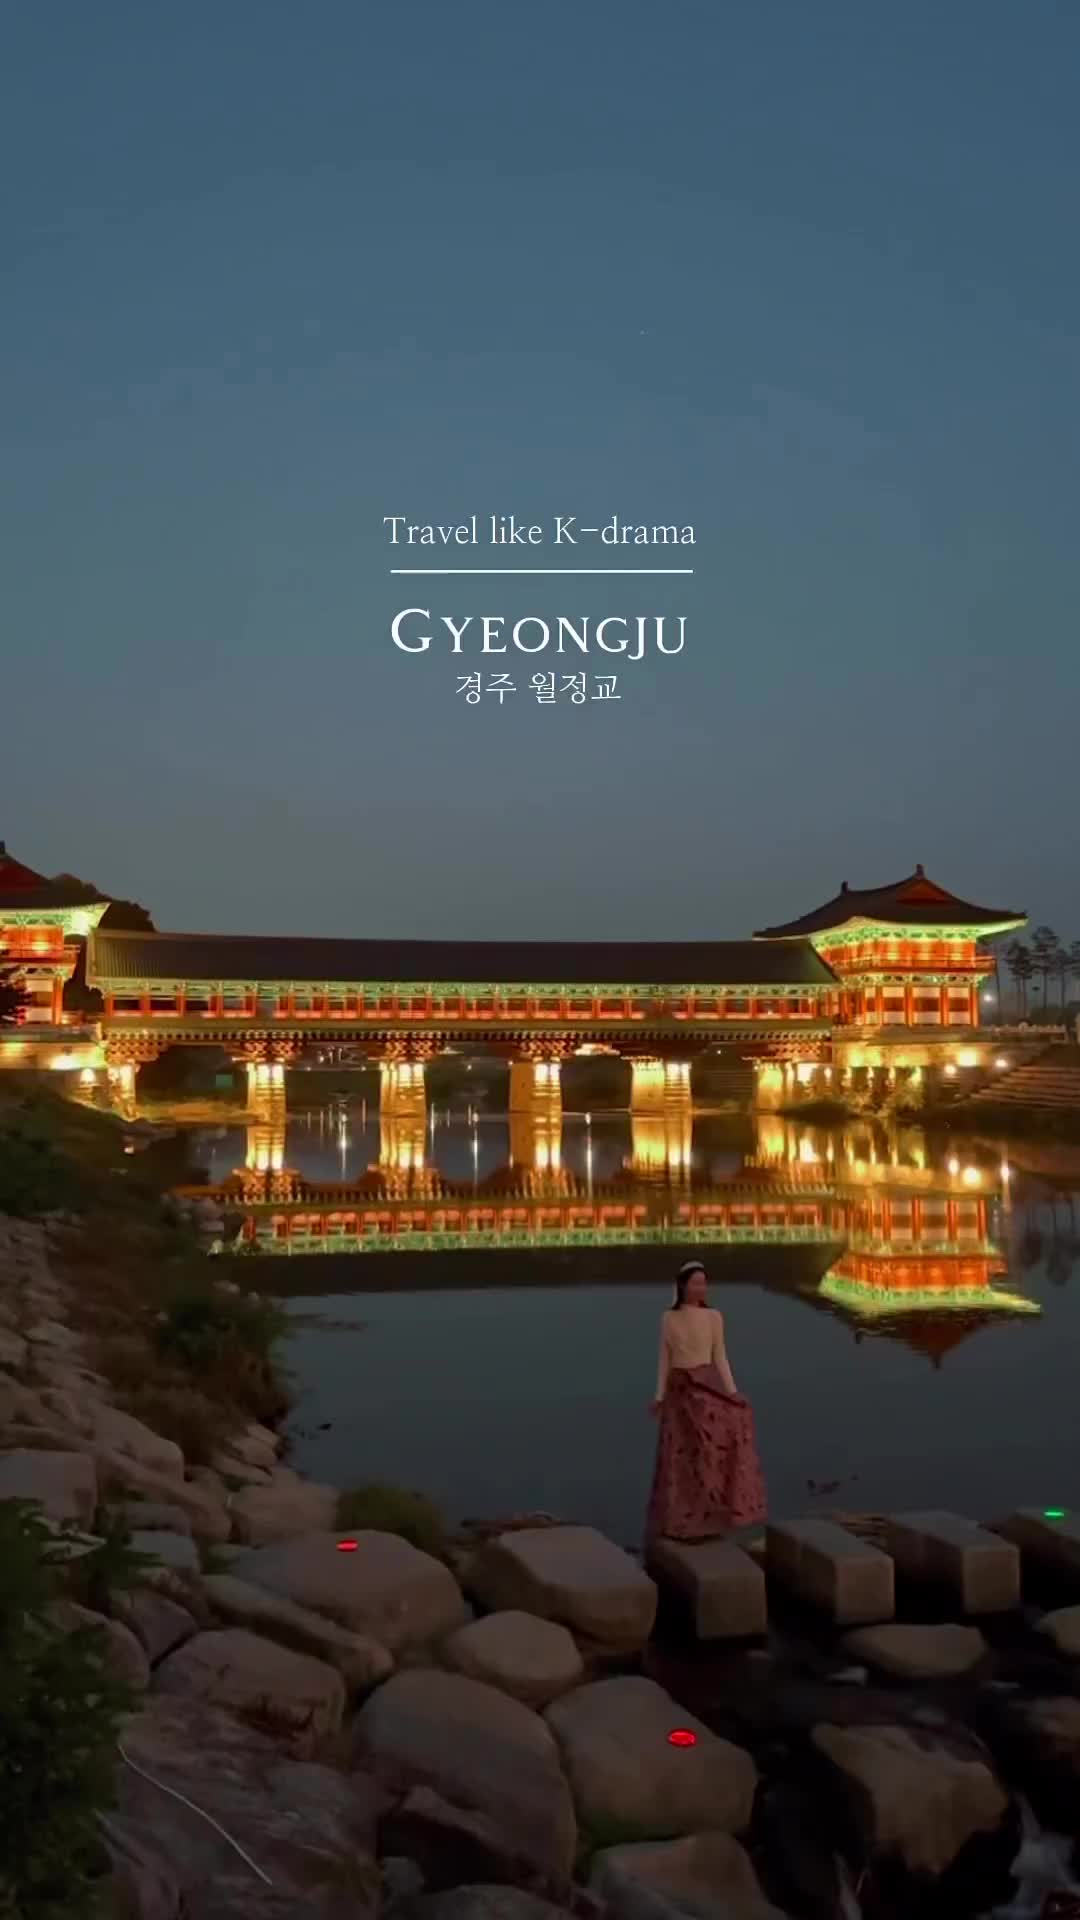 Travel Like K-drama: Explore Gyeongju’s Woljeong Bridge